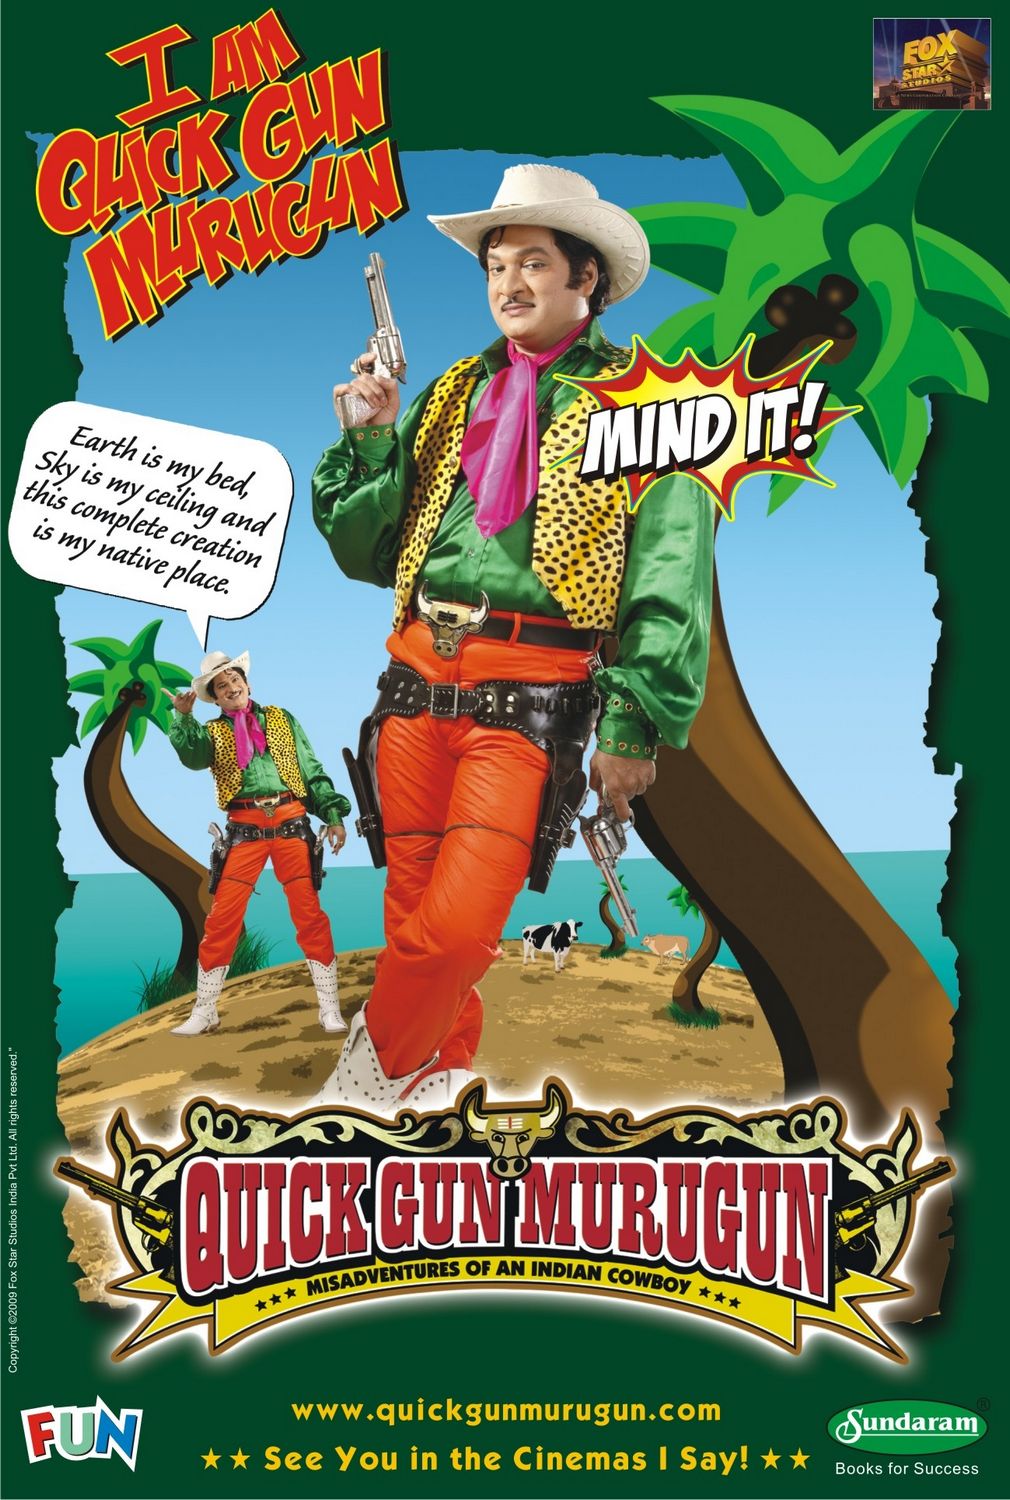 Extra Large Movie Poster Image for Quick Gun Murugun (#5 of 8)